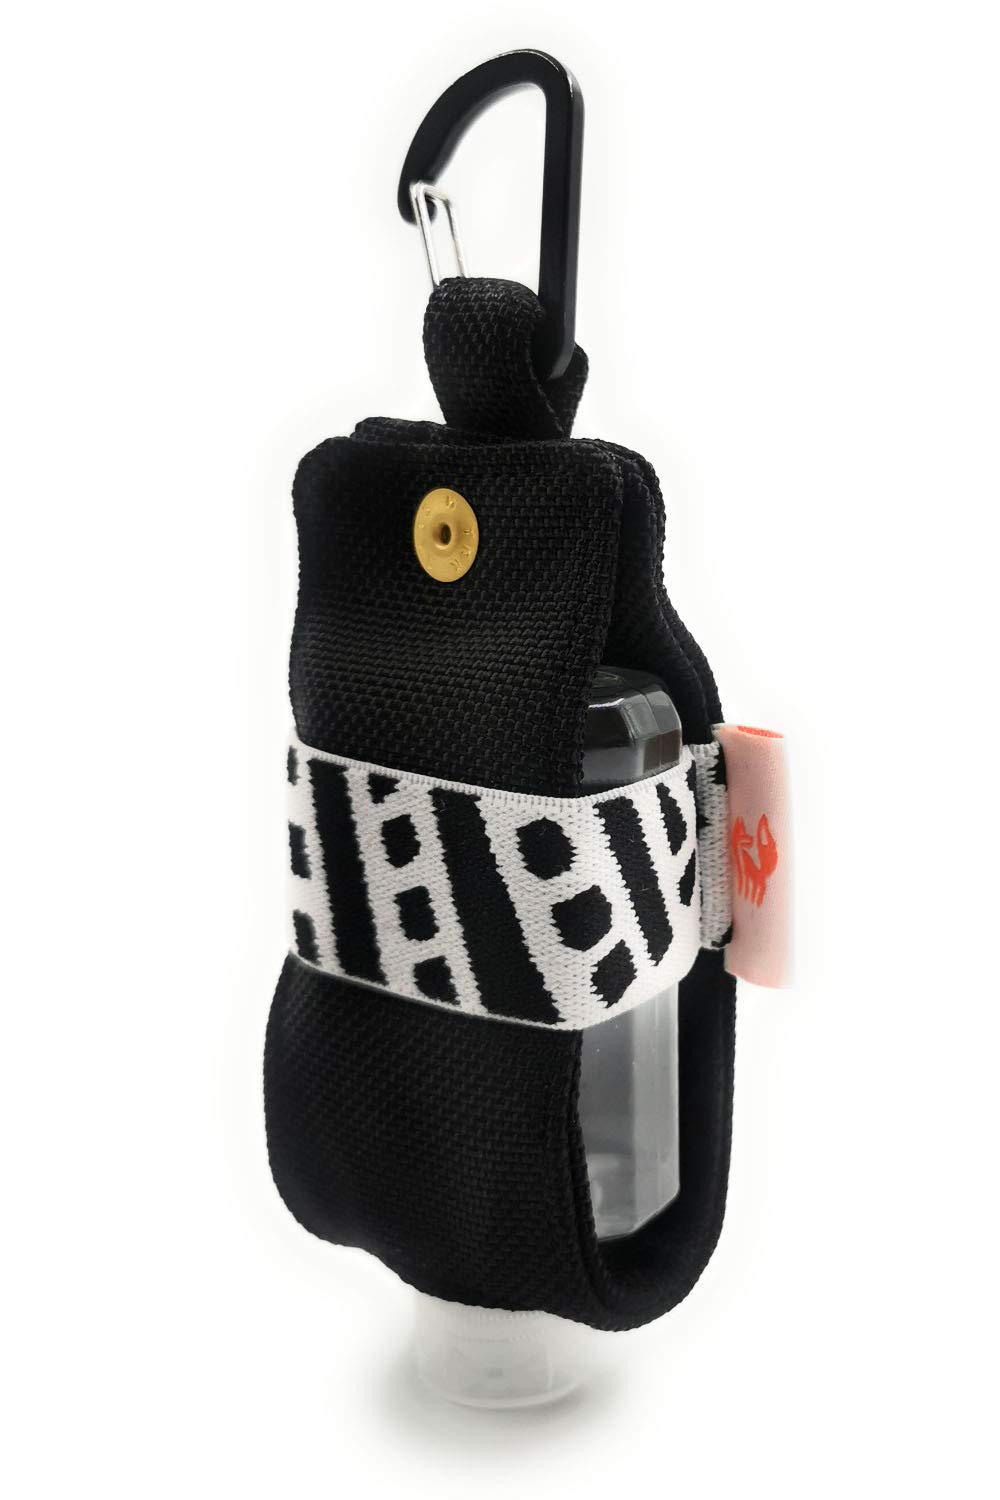 Travel Size Hand Sanitizer Holder Bottle Case and Carabiner Carrier  bag-Portable Mini Waist Bag for Liquids Clip On Belt Loop Backpack and Purse  - Includes Empty 60ml/ 2 oz Reusable Bottle (Black)